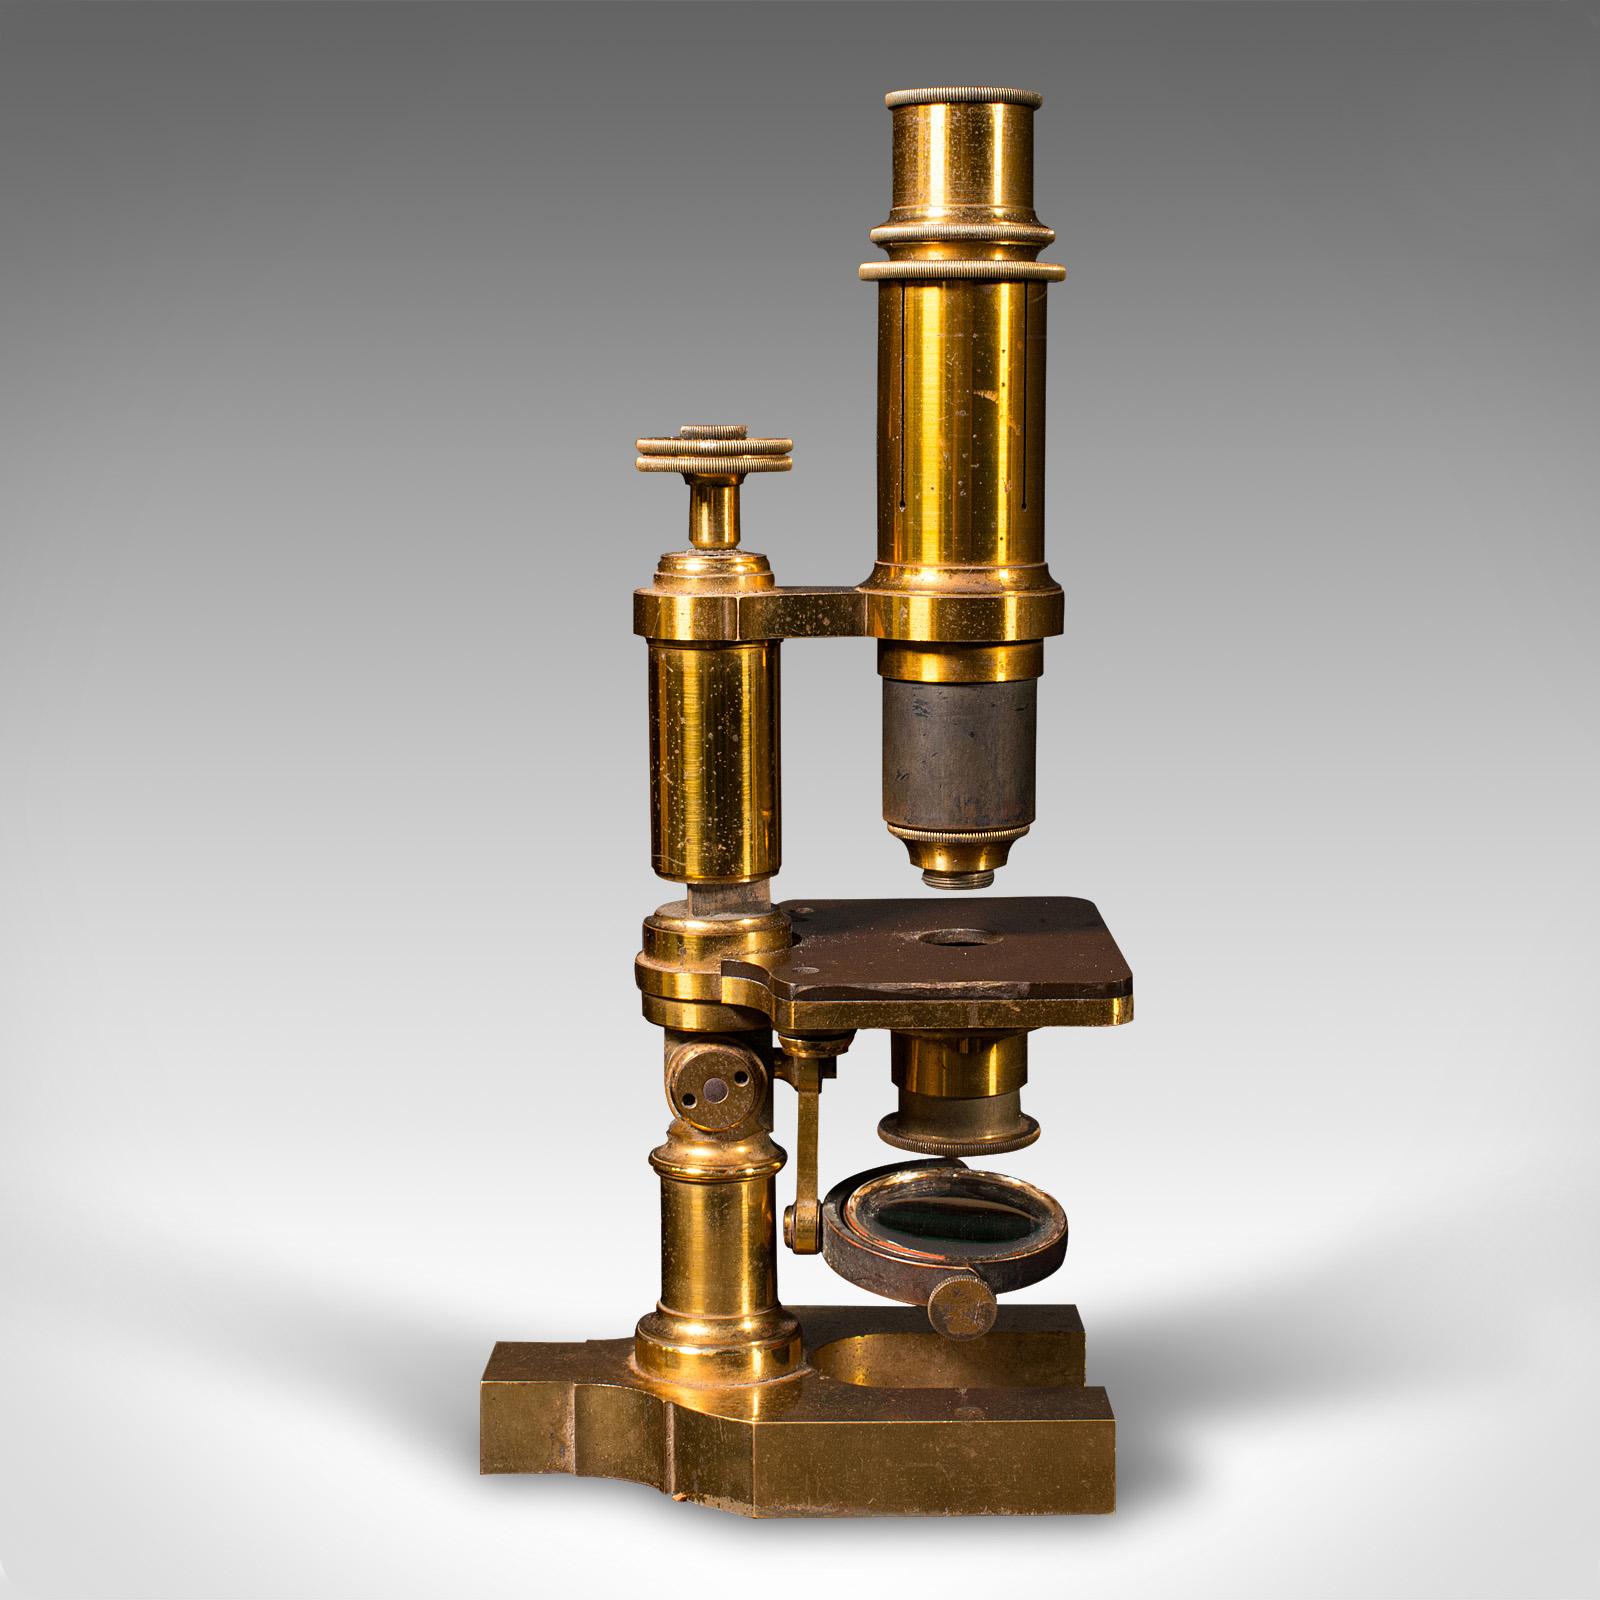 British Antique Monocular Microscope, English Brass, Scientific Instrument, Victorian